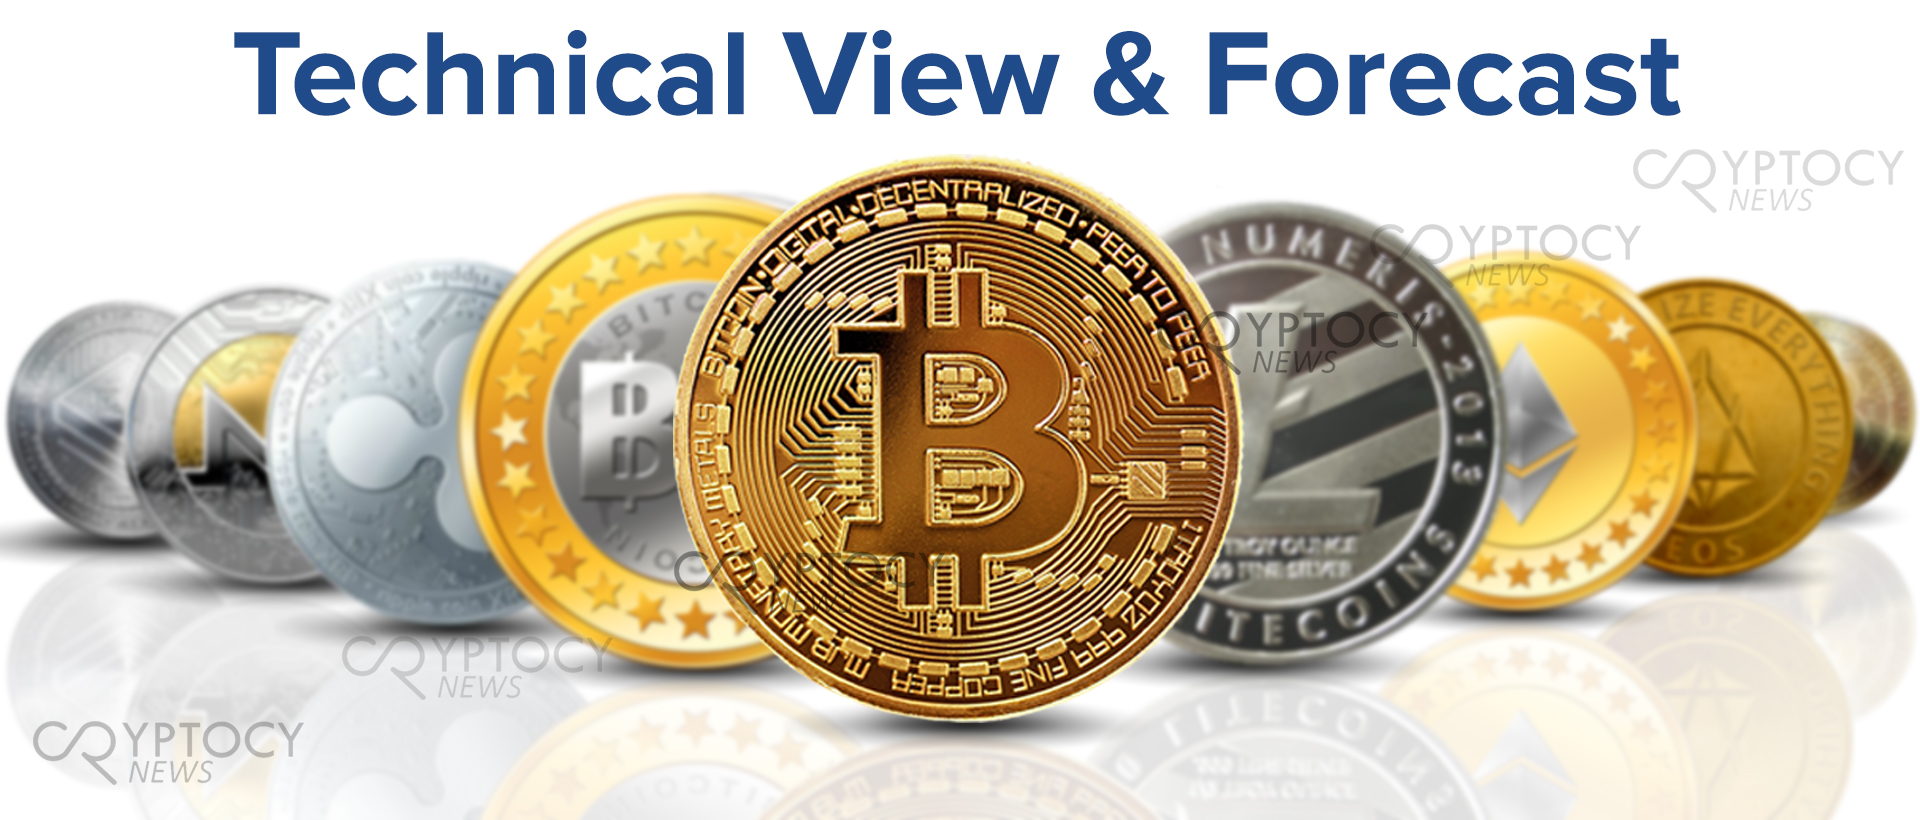 Bitcoin Technical View 06/06/18